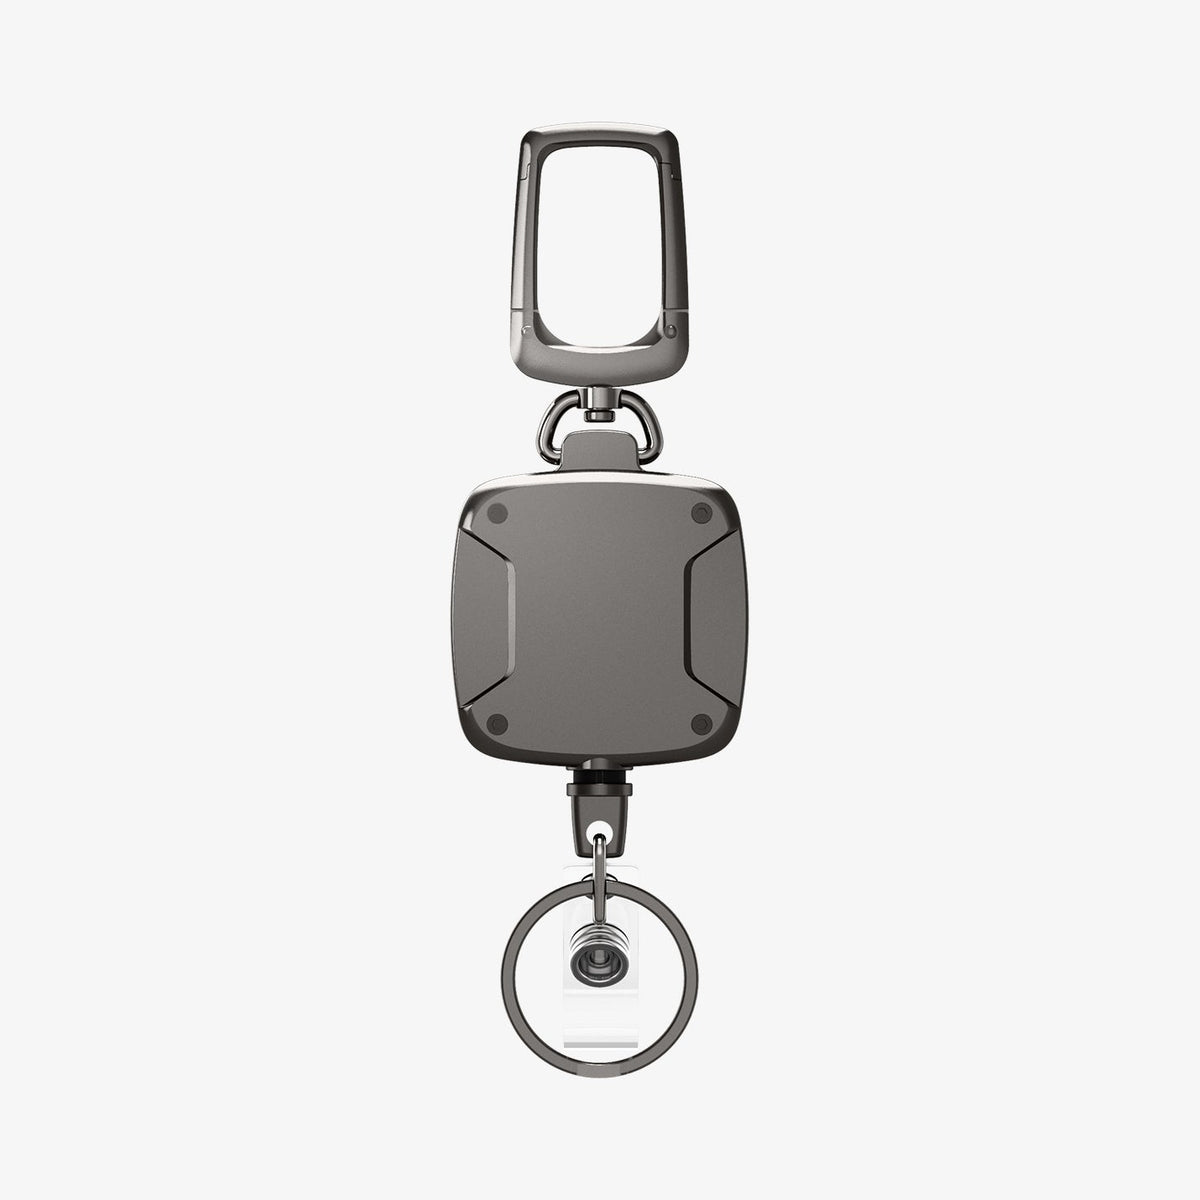  ELV Self Retractable ID Badge Holder Key Reel, Heavy